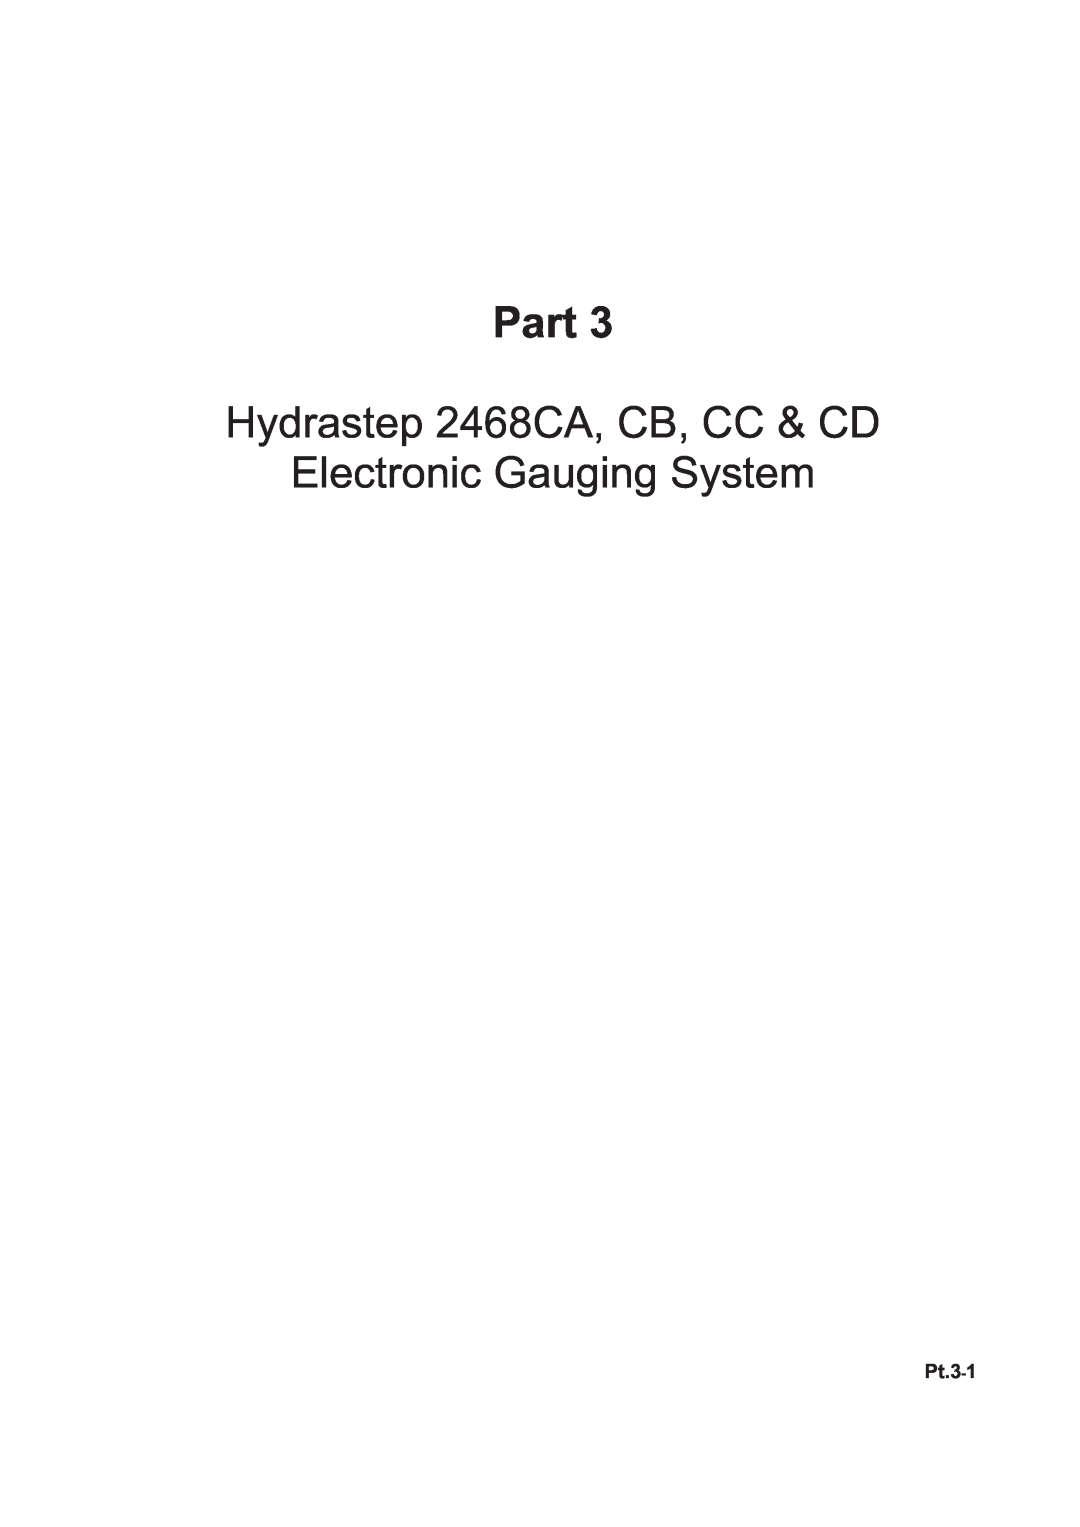 Emerson 2468CD, 2468CB manual Part, Hydrastep 2468CA, CB, CC & CD, Electronic Gauging System, Pt.3-1 